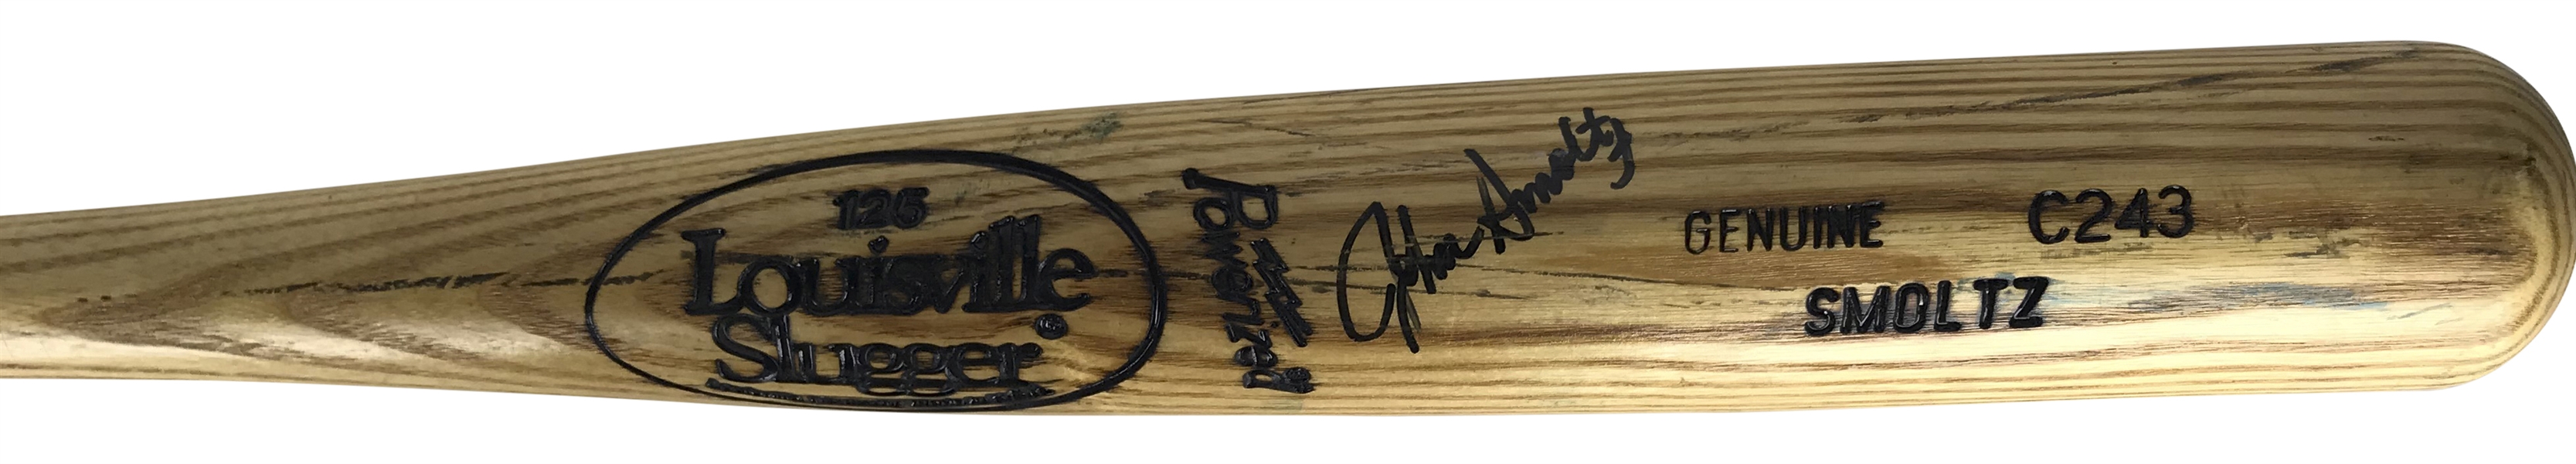 John Smoltz Signed & Game Used 1990 C243 Baseball Bat PSA/DNA GU 8.5!